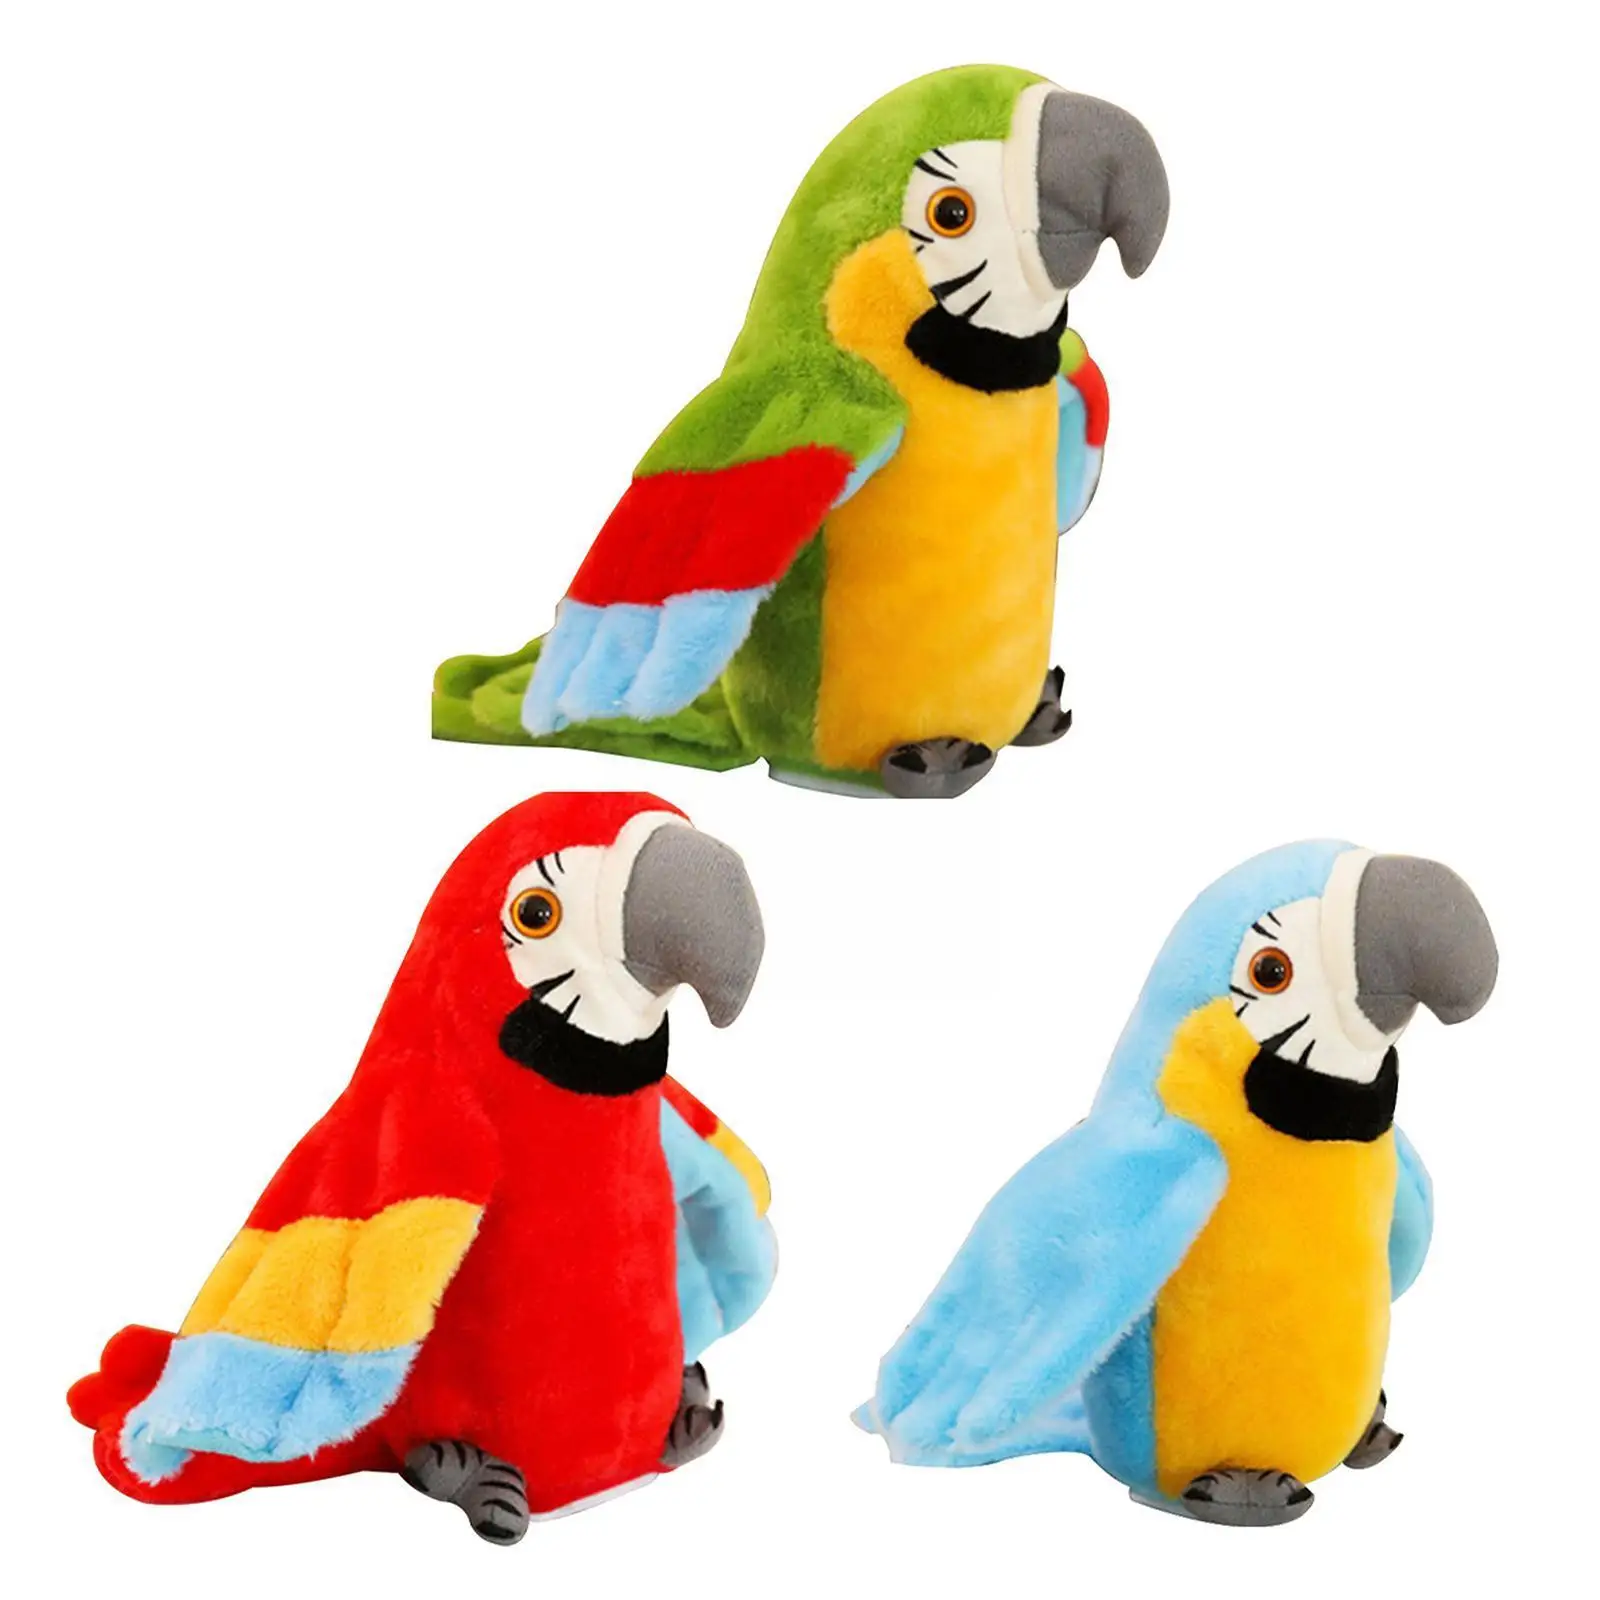 Talking Record Cute Parrot Waving Electronic Pet Stuffed Plush Toy Educa... - $16.71